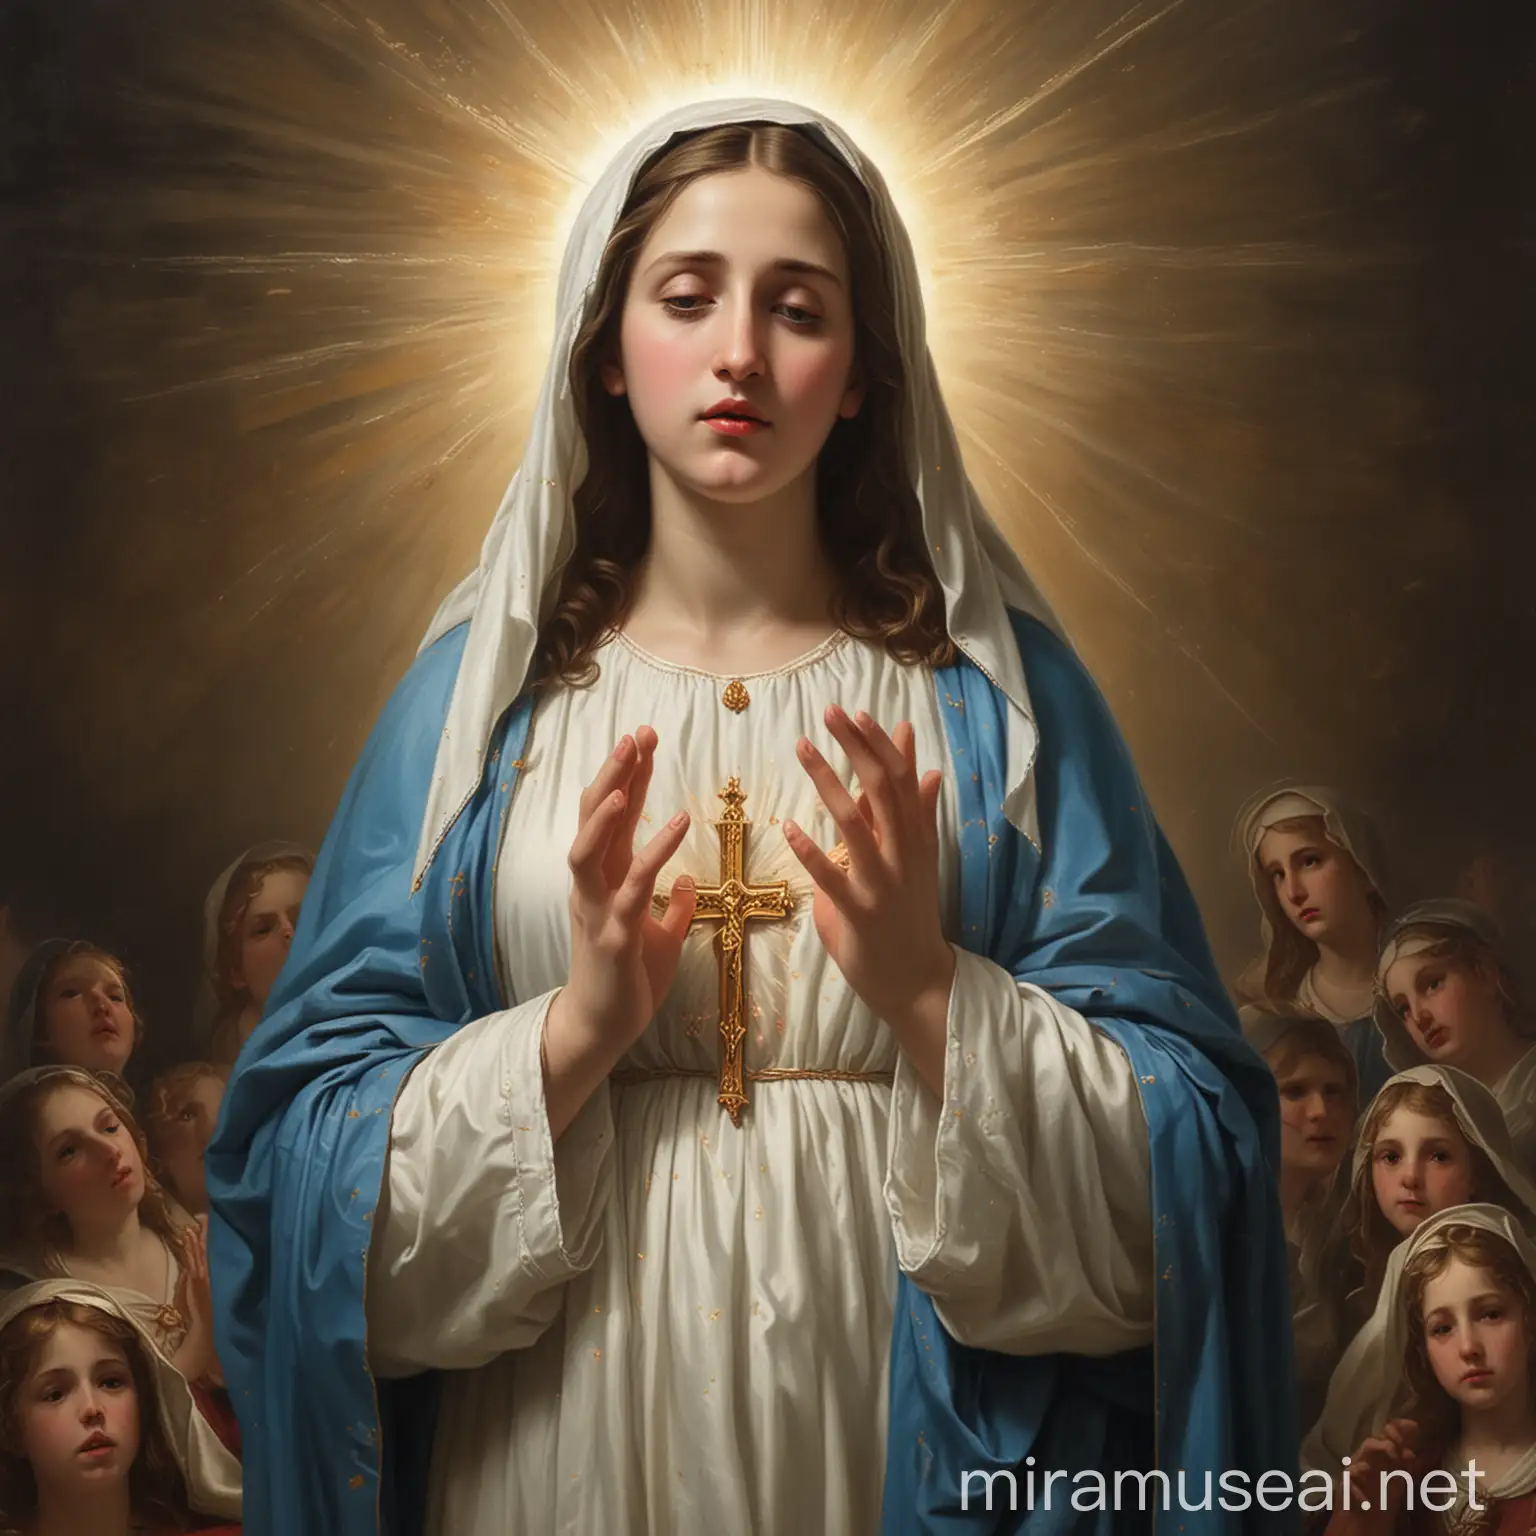 Emotional Virgin Mary in Illuminated Portrait